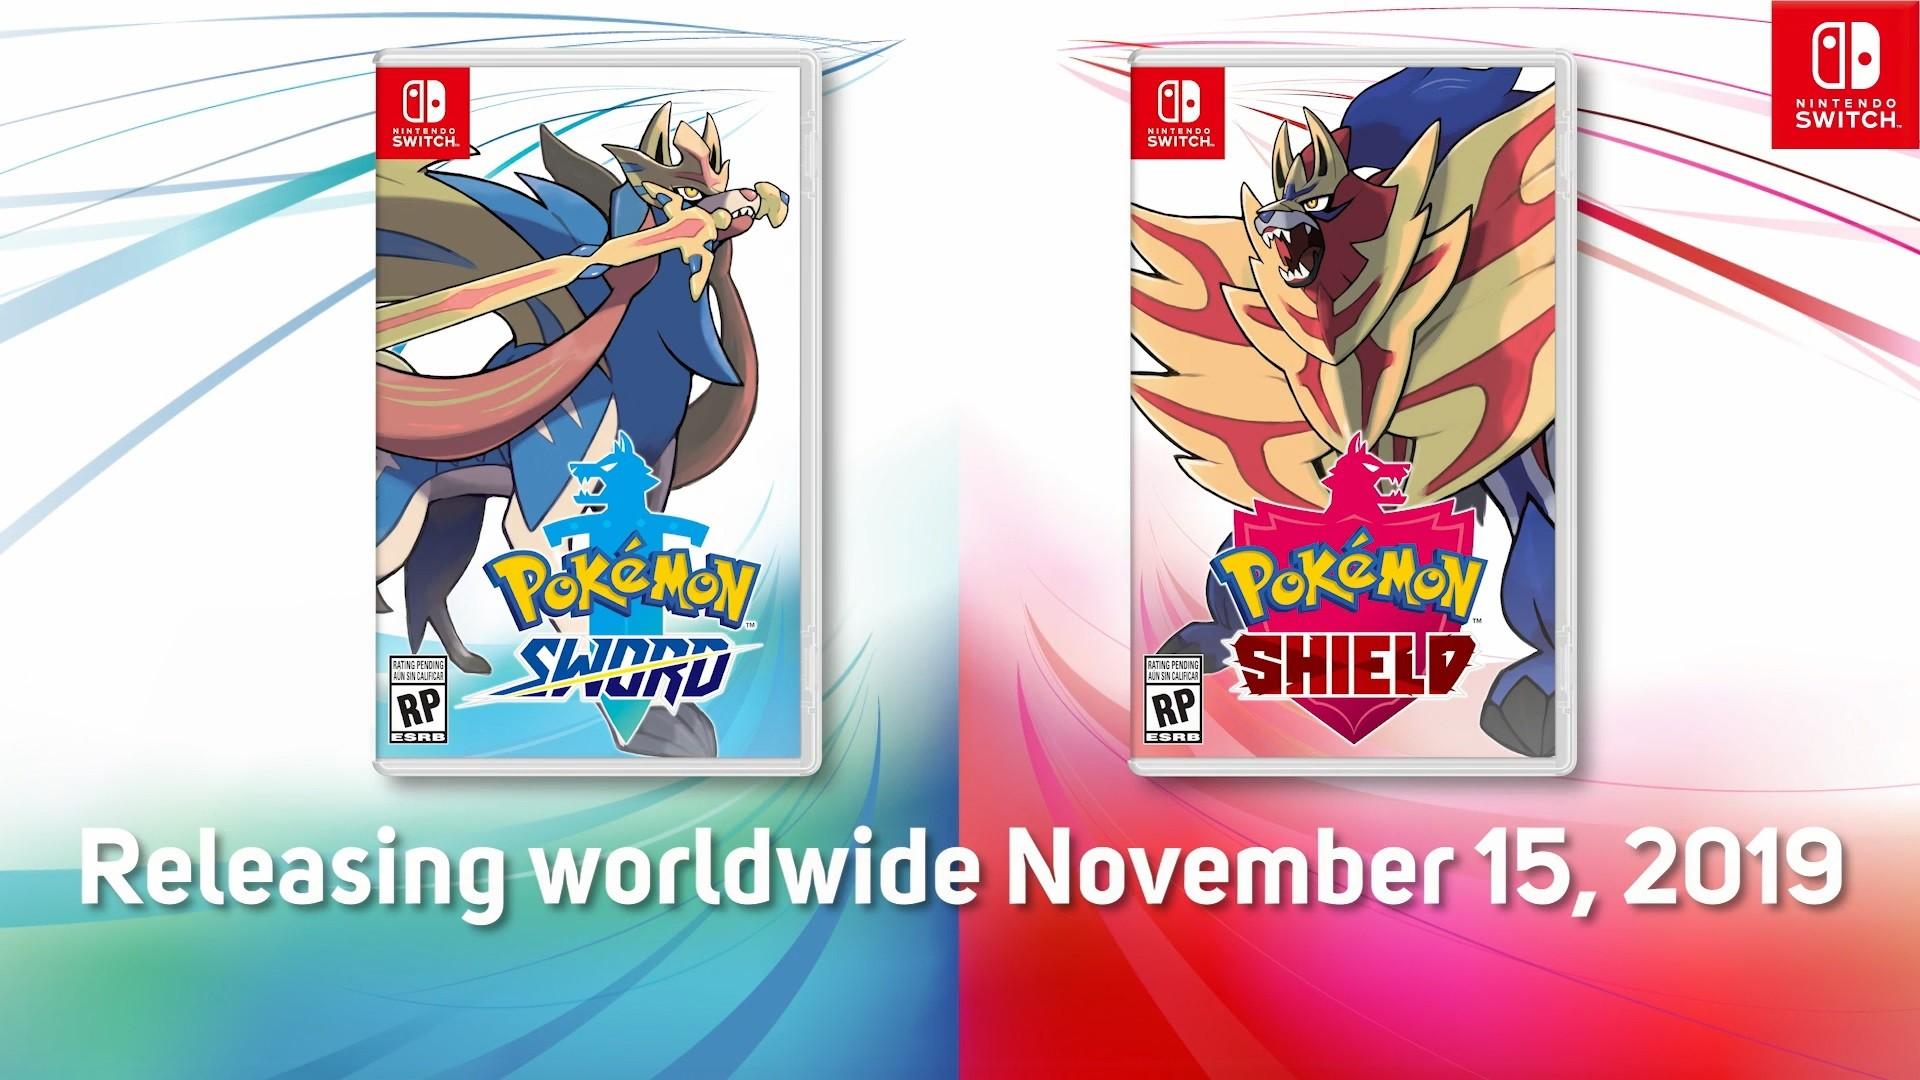 Pokémon Sword and Shield releasing worldwide on November 15